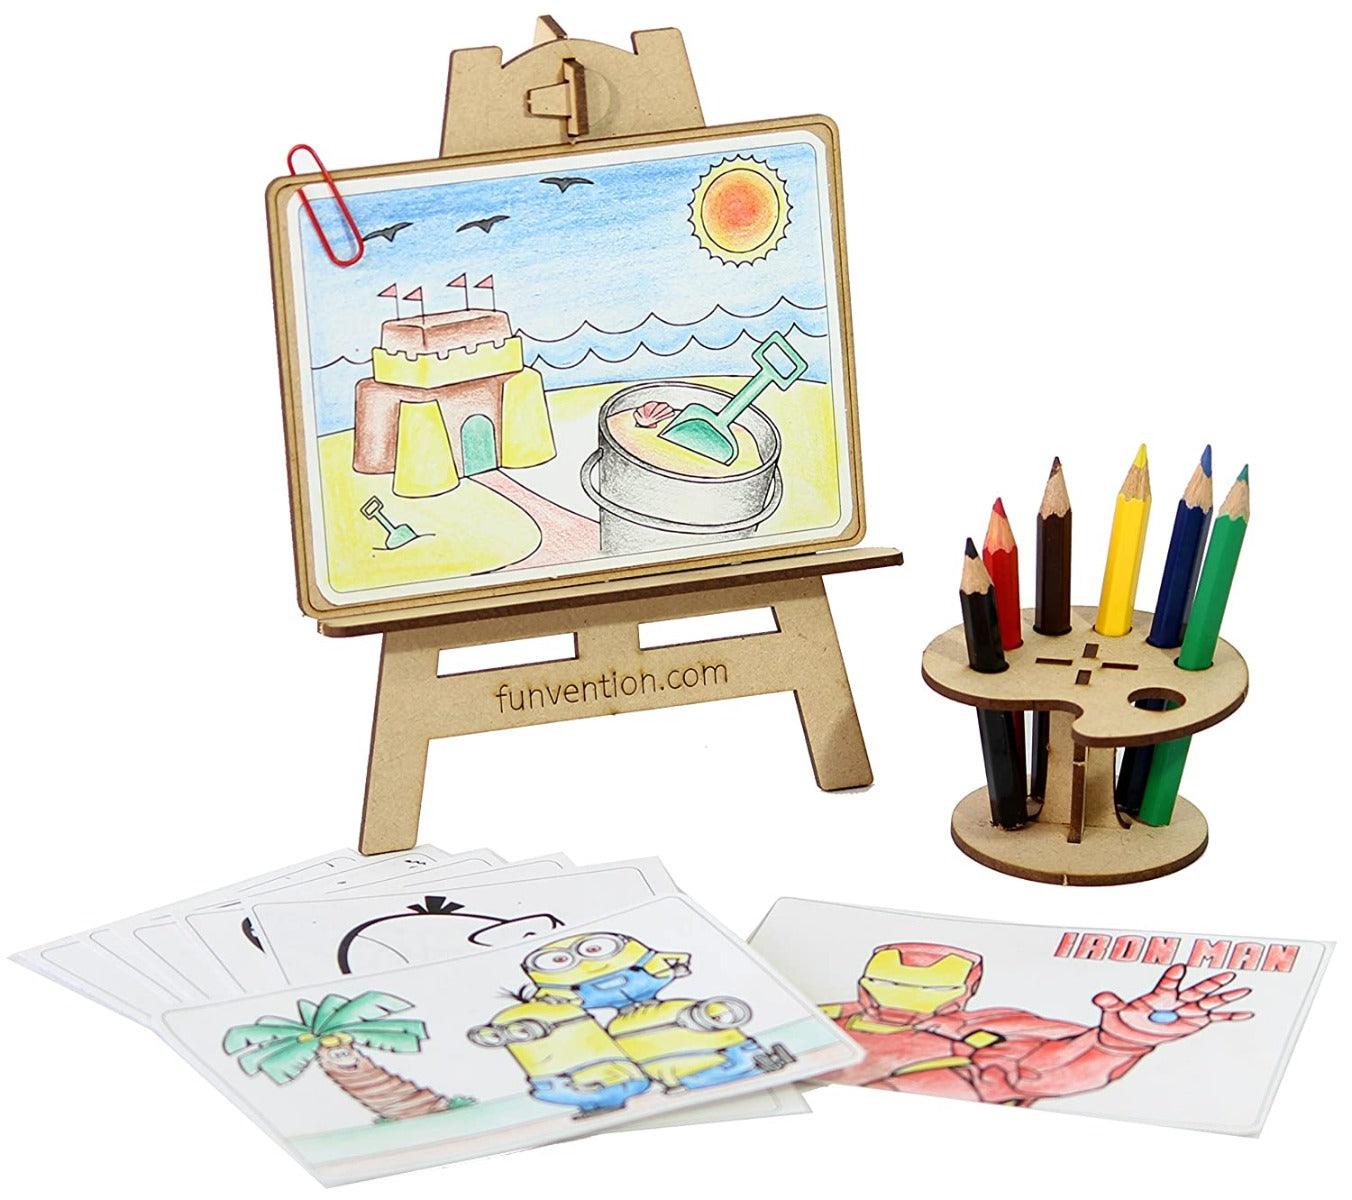 Funvention Little Art Gallery - DIY Art & Craft Kit - Express your imagination & creativity Kit